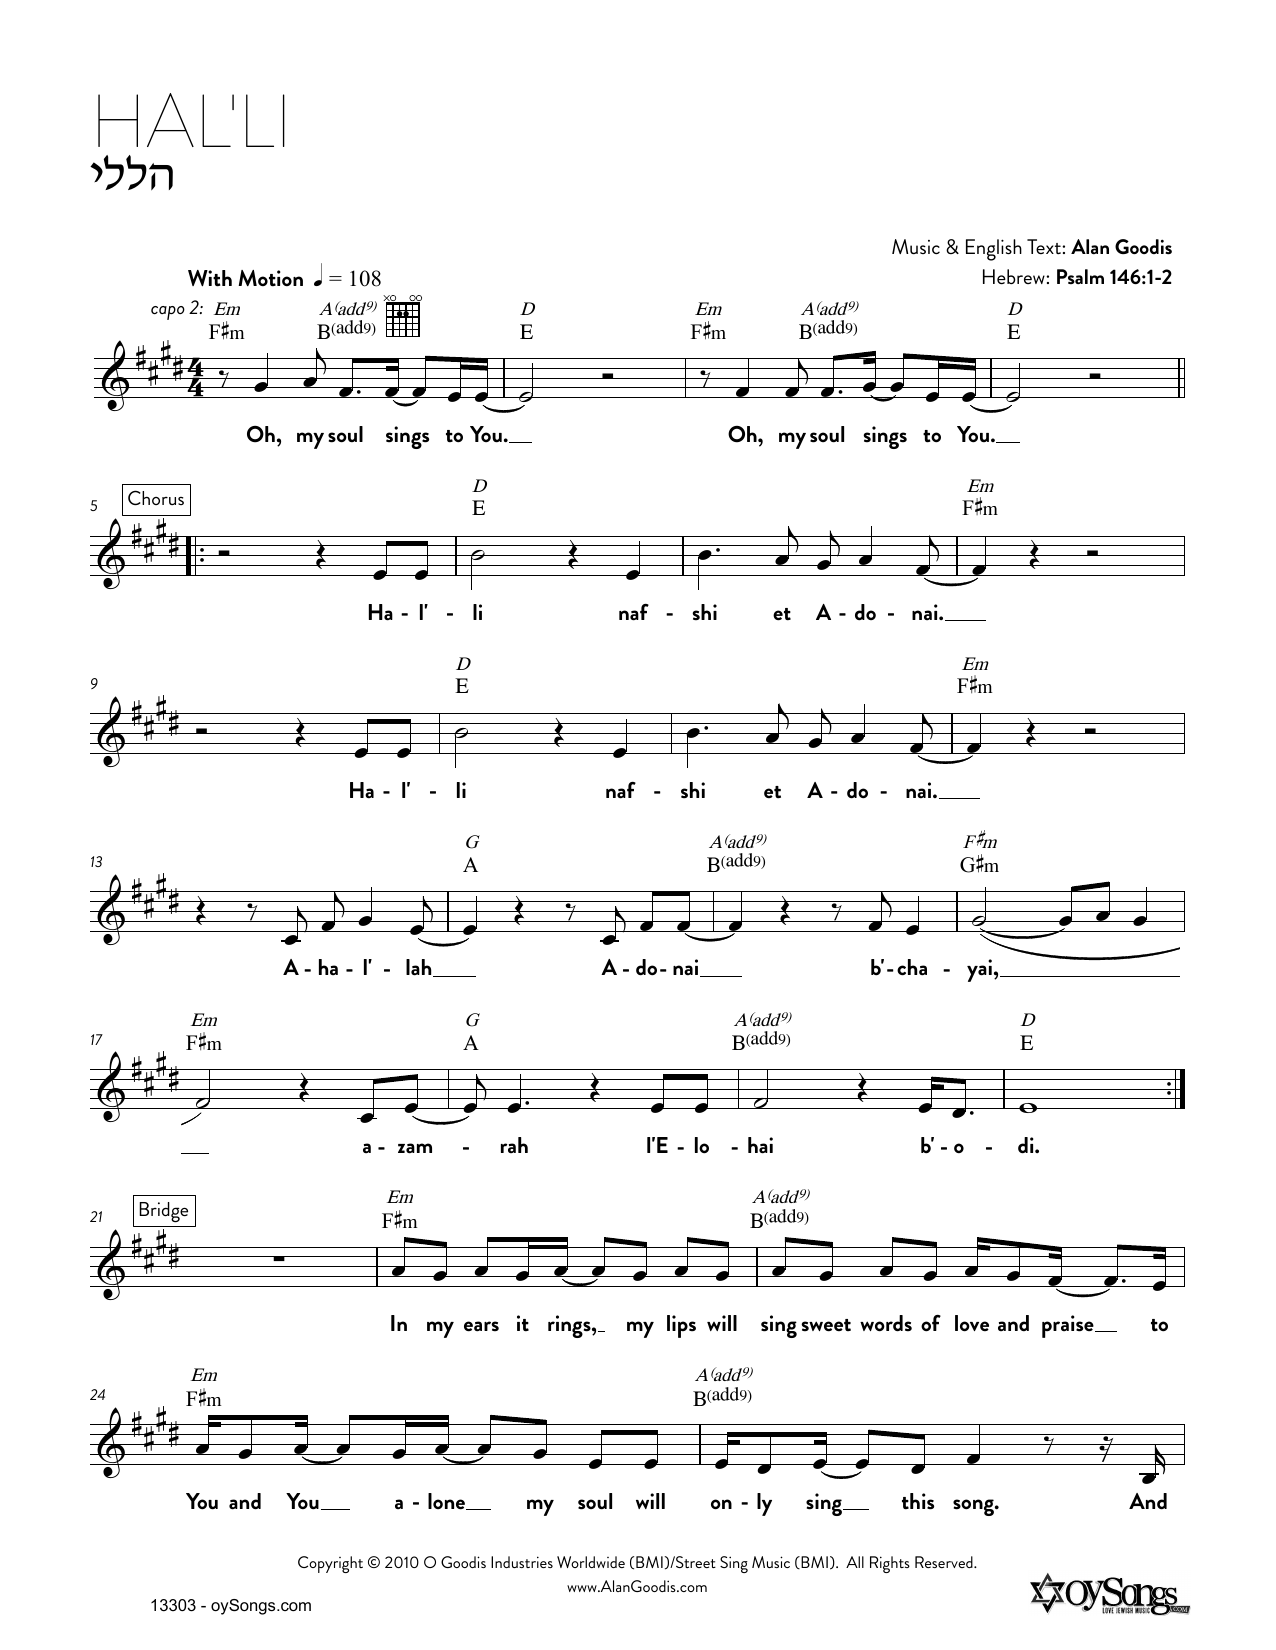 Alan Goodis Hal'li Sheet Music Notes & Chords for Real Book – Melody, Lyrics & Chords - Download or Print PDF